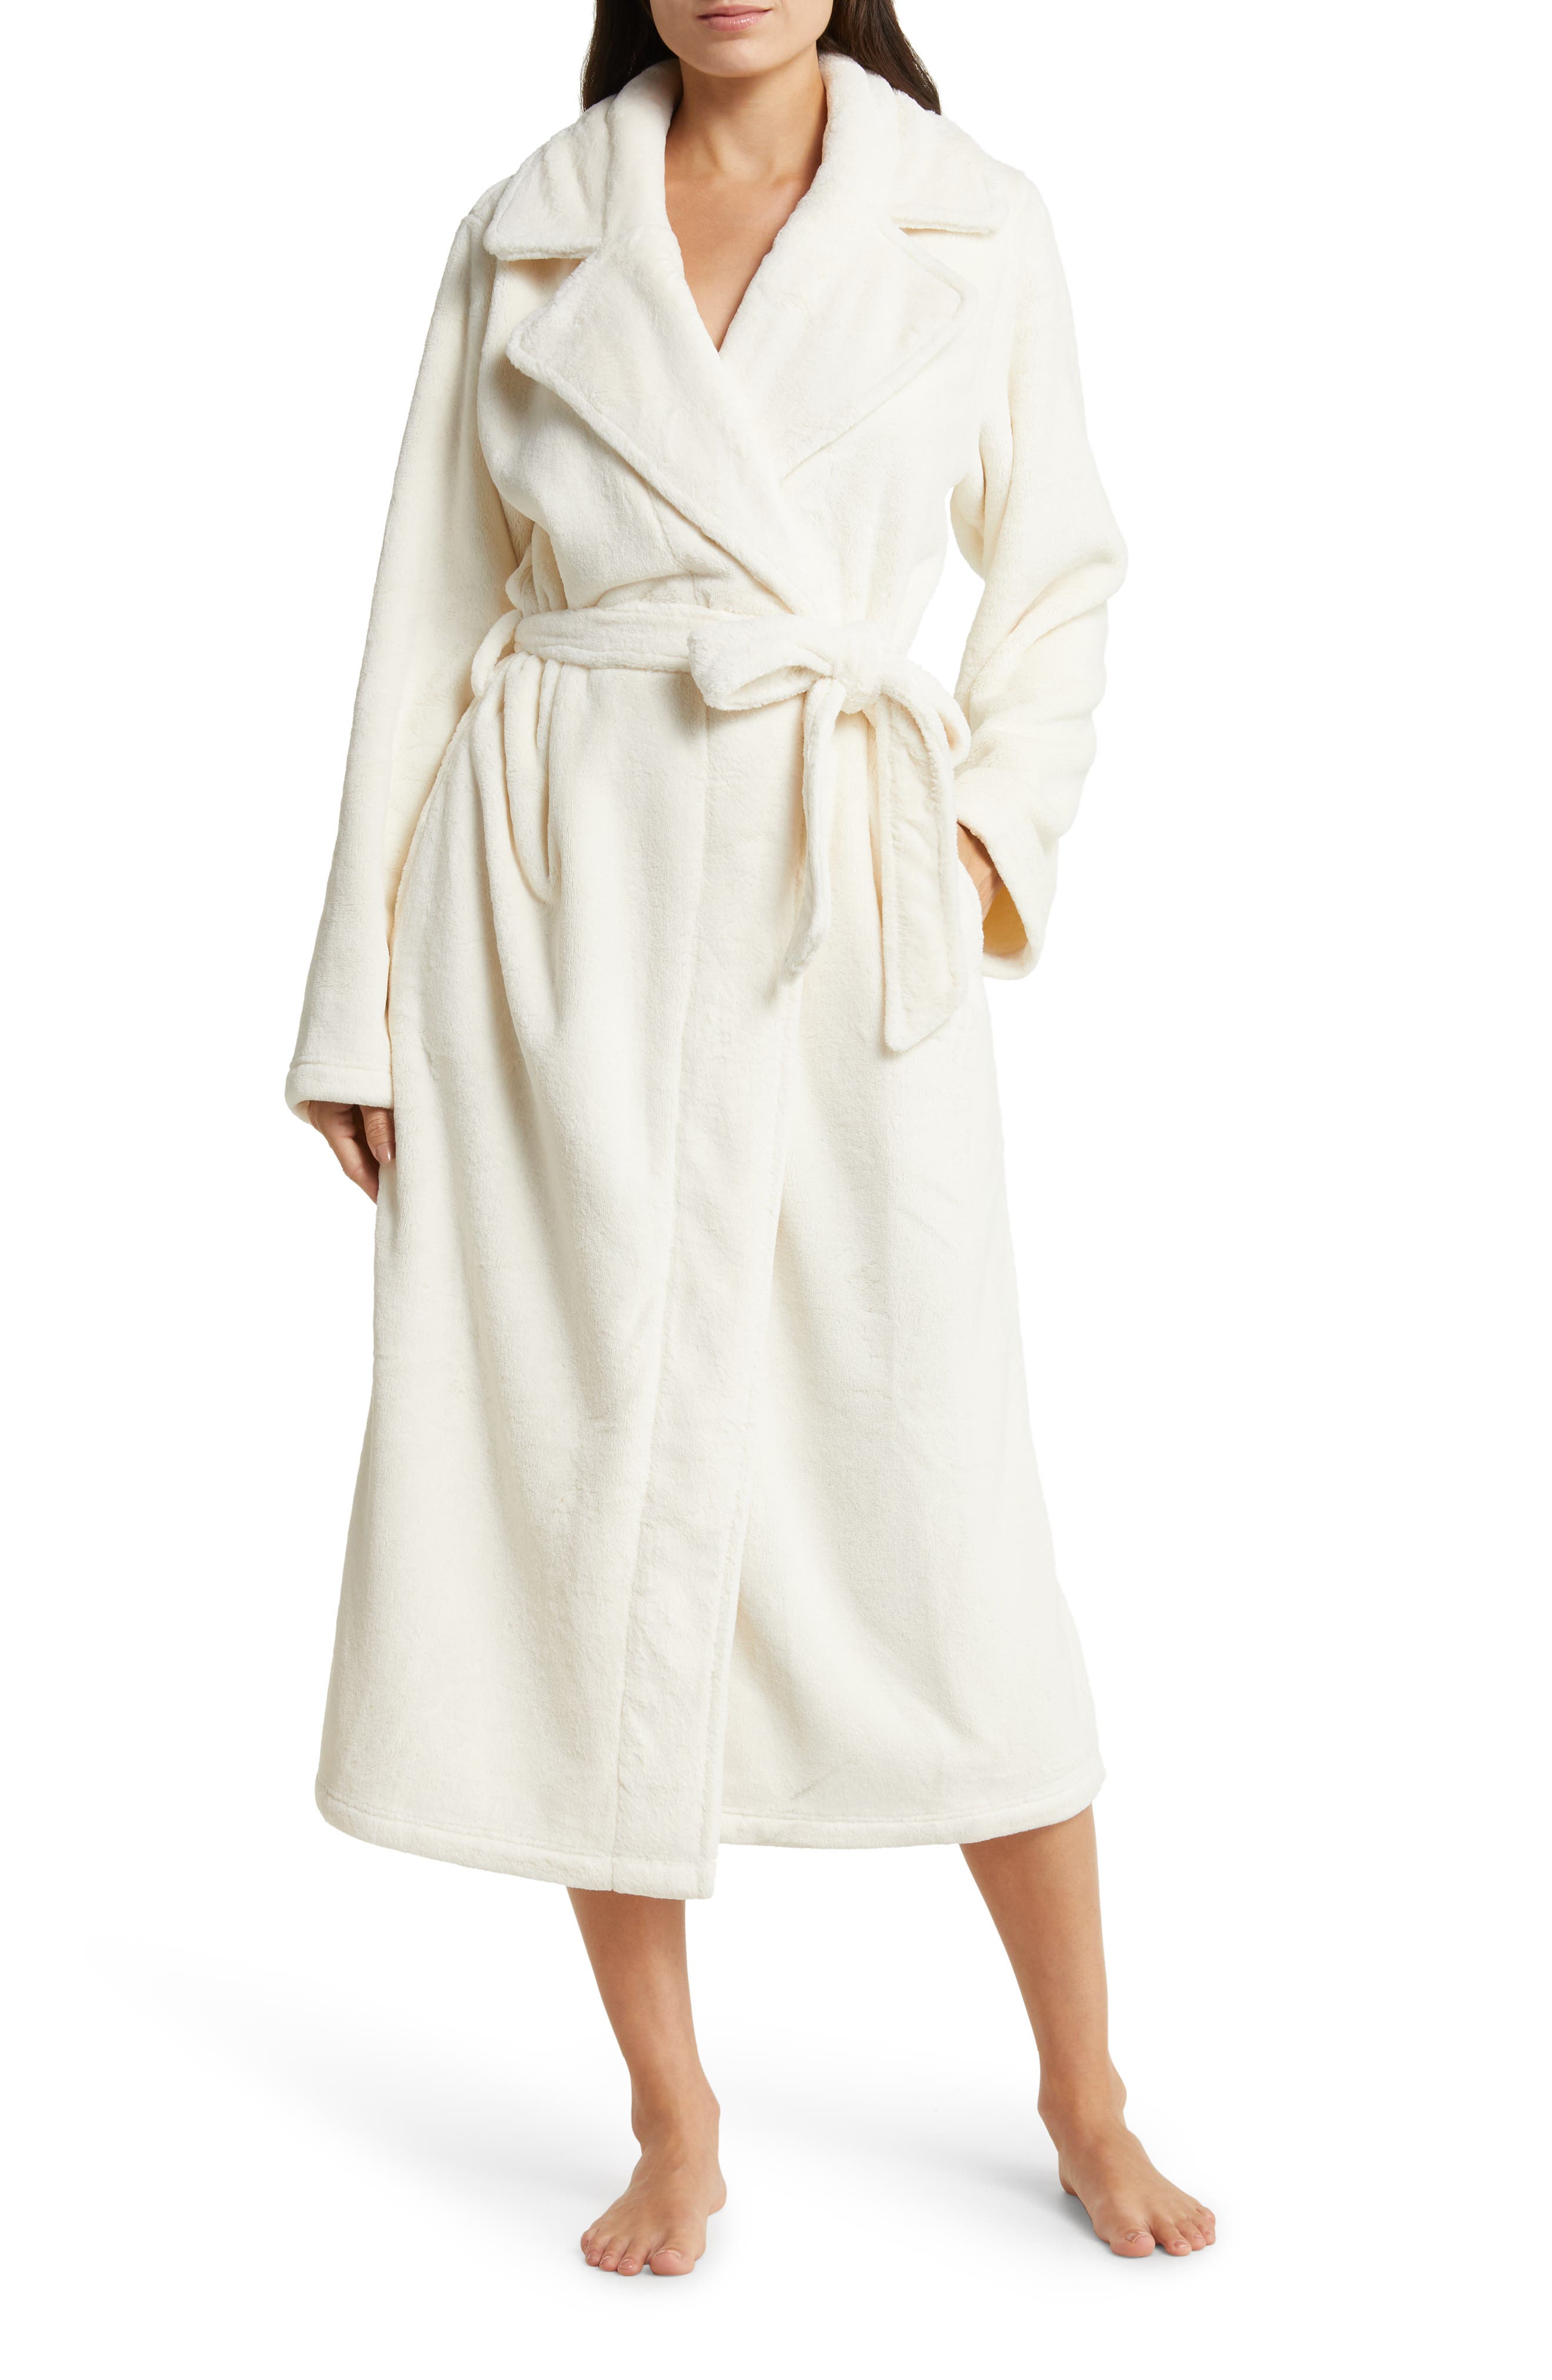 Nordstrom Clothing Loungewear Bathrobes Kids Hooded Plush Robe in Ivory Egret at Nordstrom 